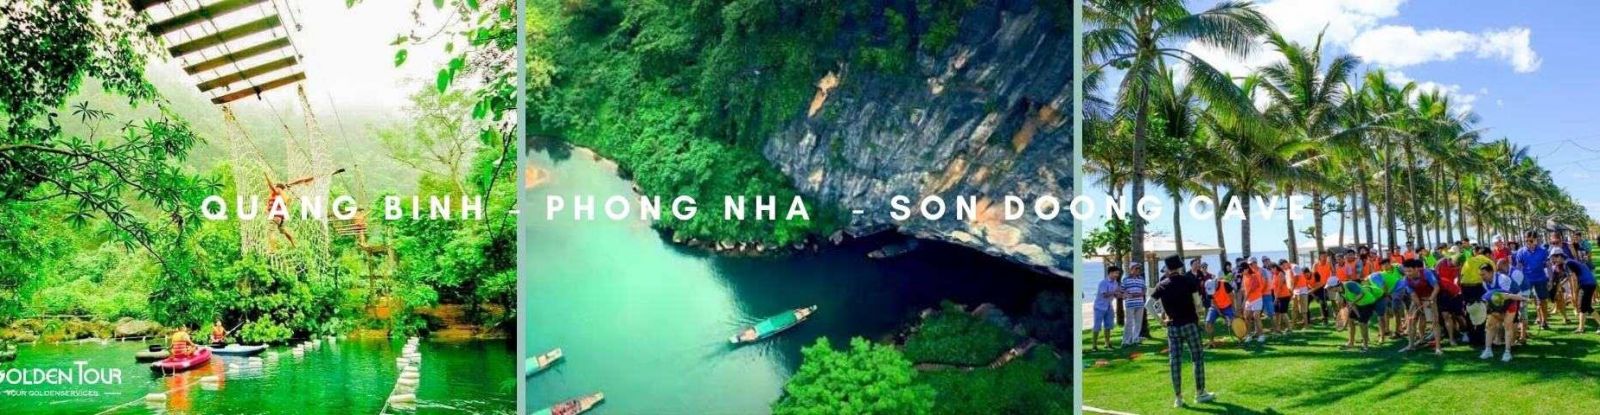 Destinations in Phong Nha - Son Doong - Quang Binh 